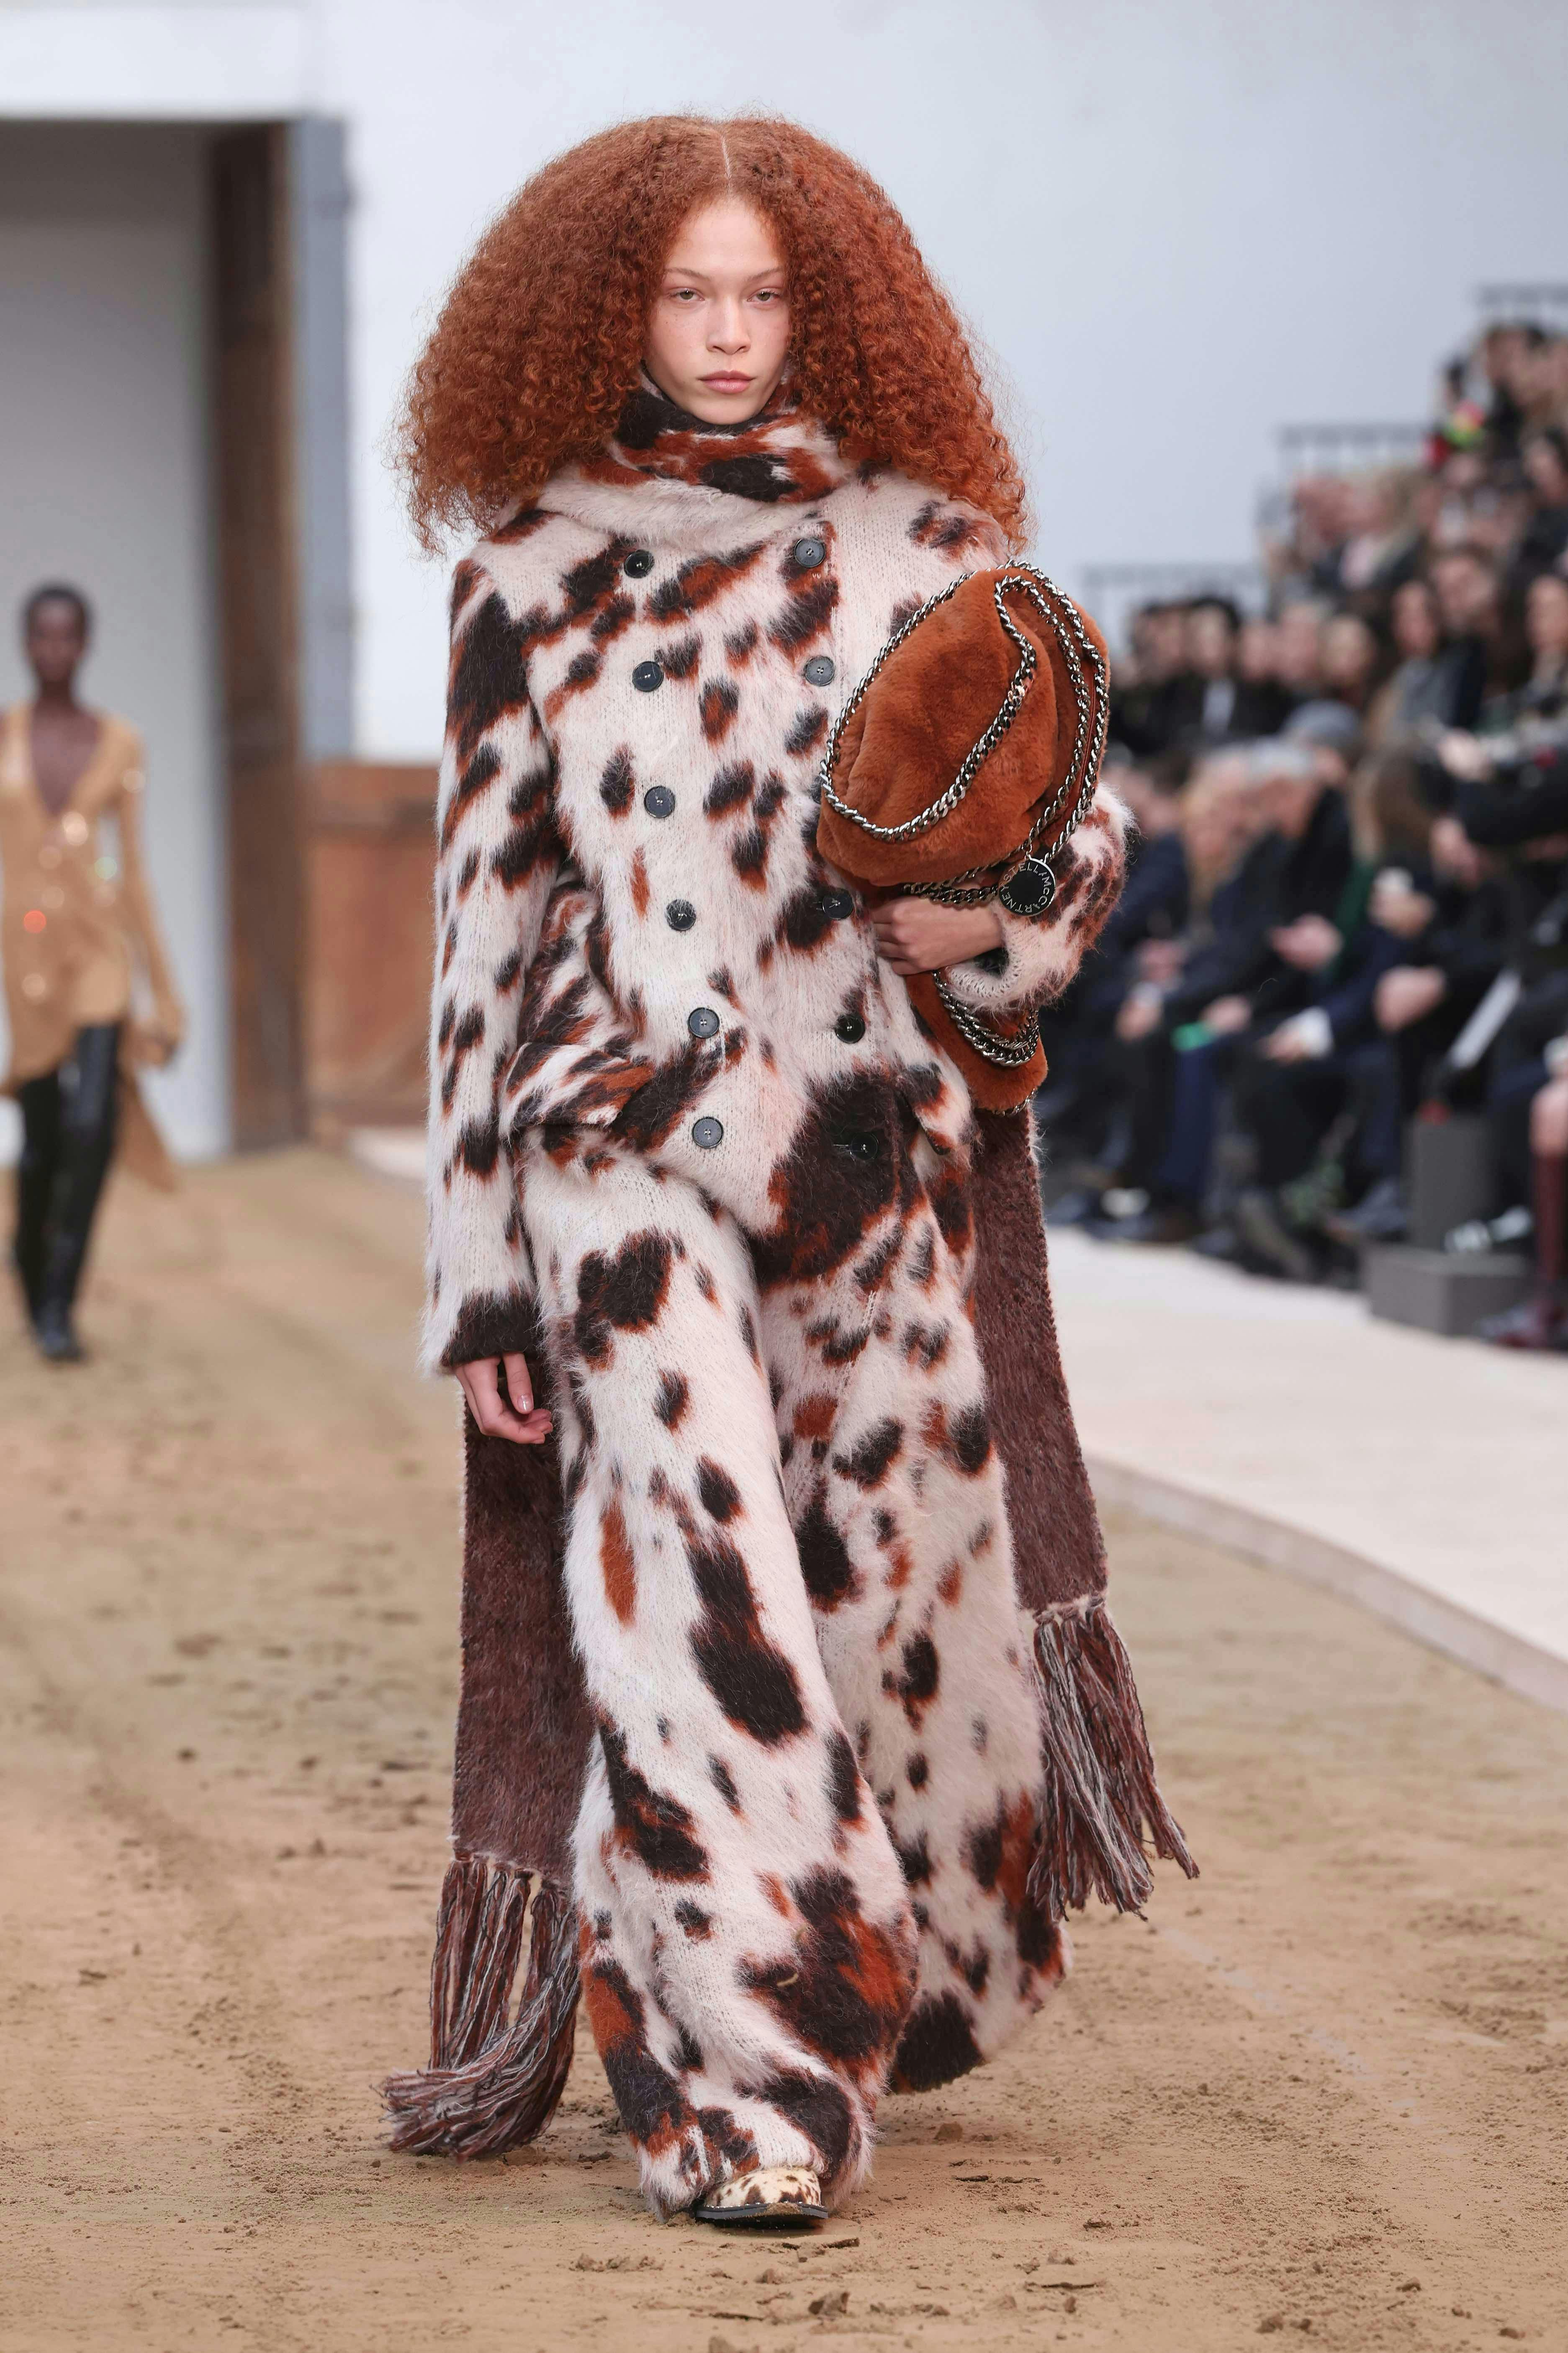 paris adult female person woman fashion lady clothing fur